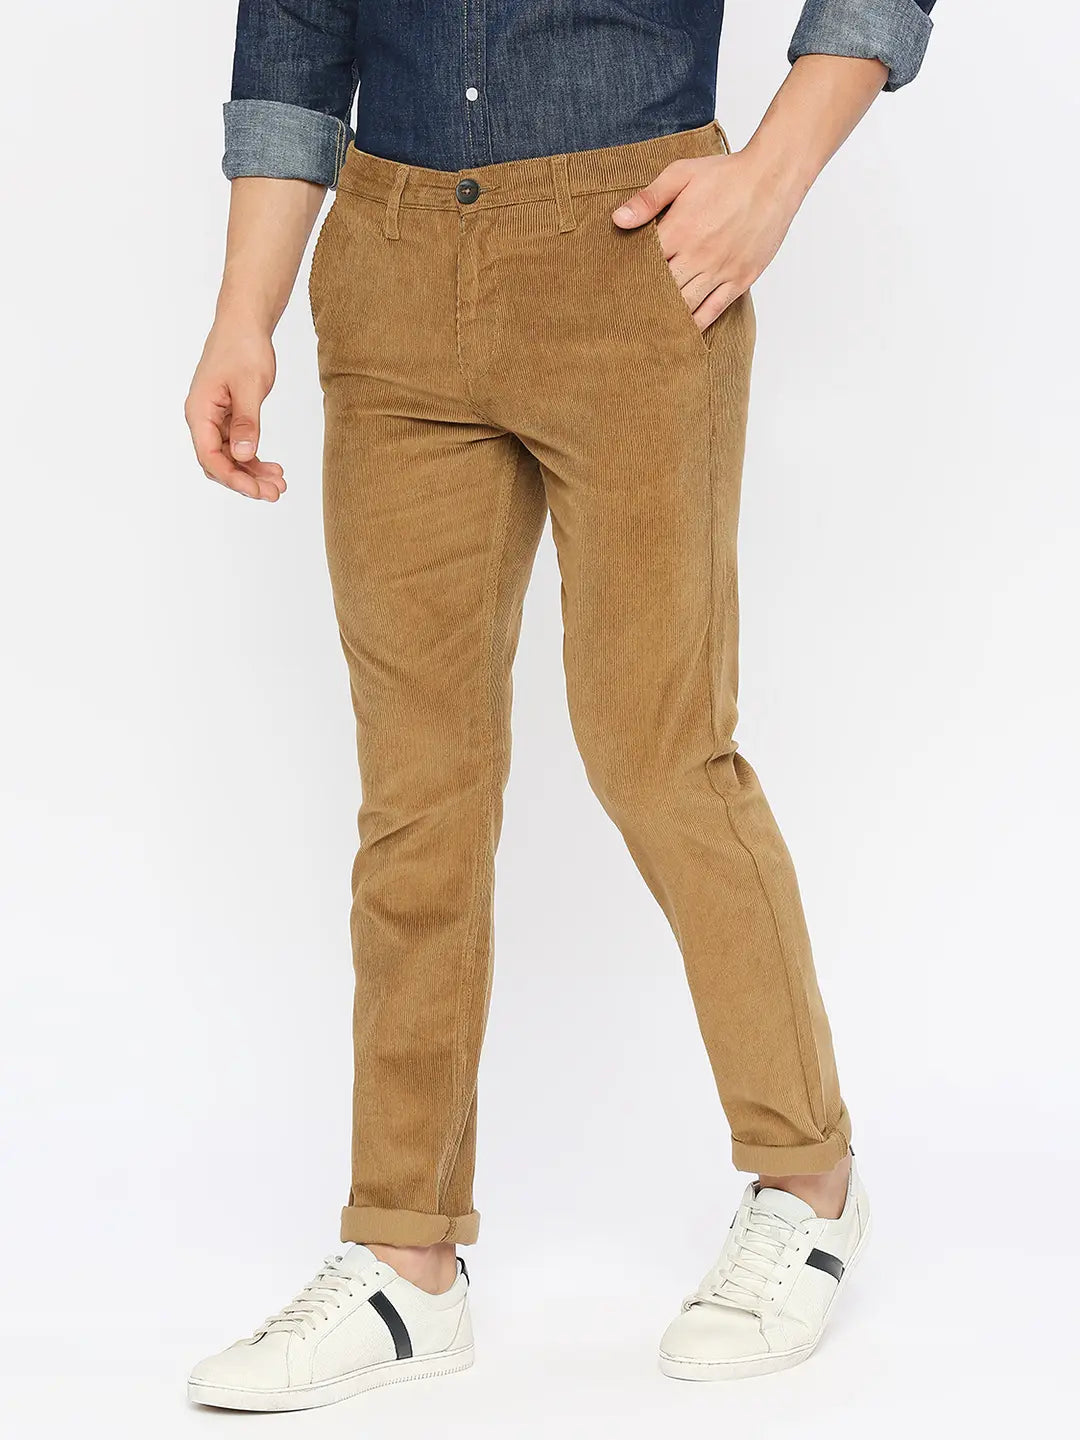 Shopper Tree Cotton & Linen Khaki Colour Full Length Trouser for Boys :  Amazon.in: Fashion